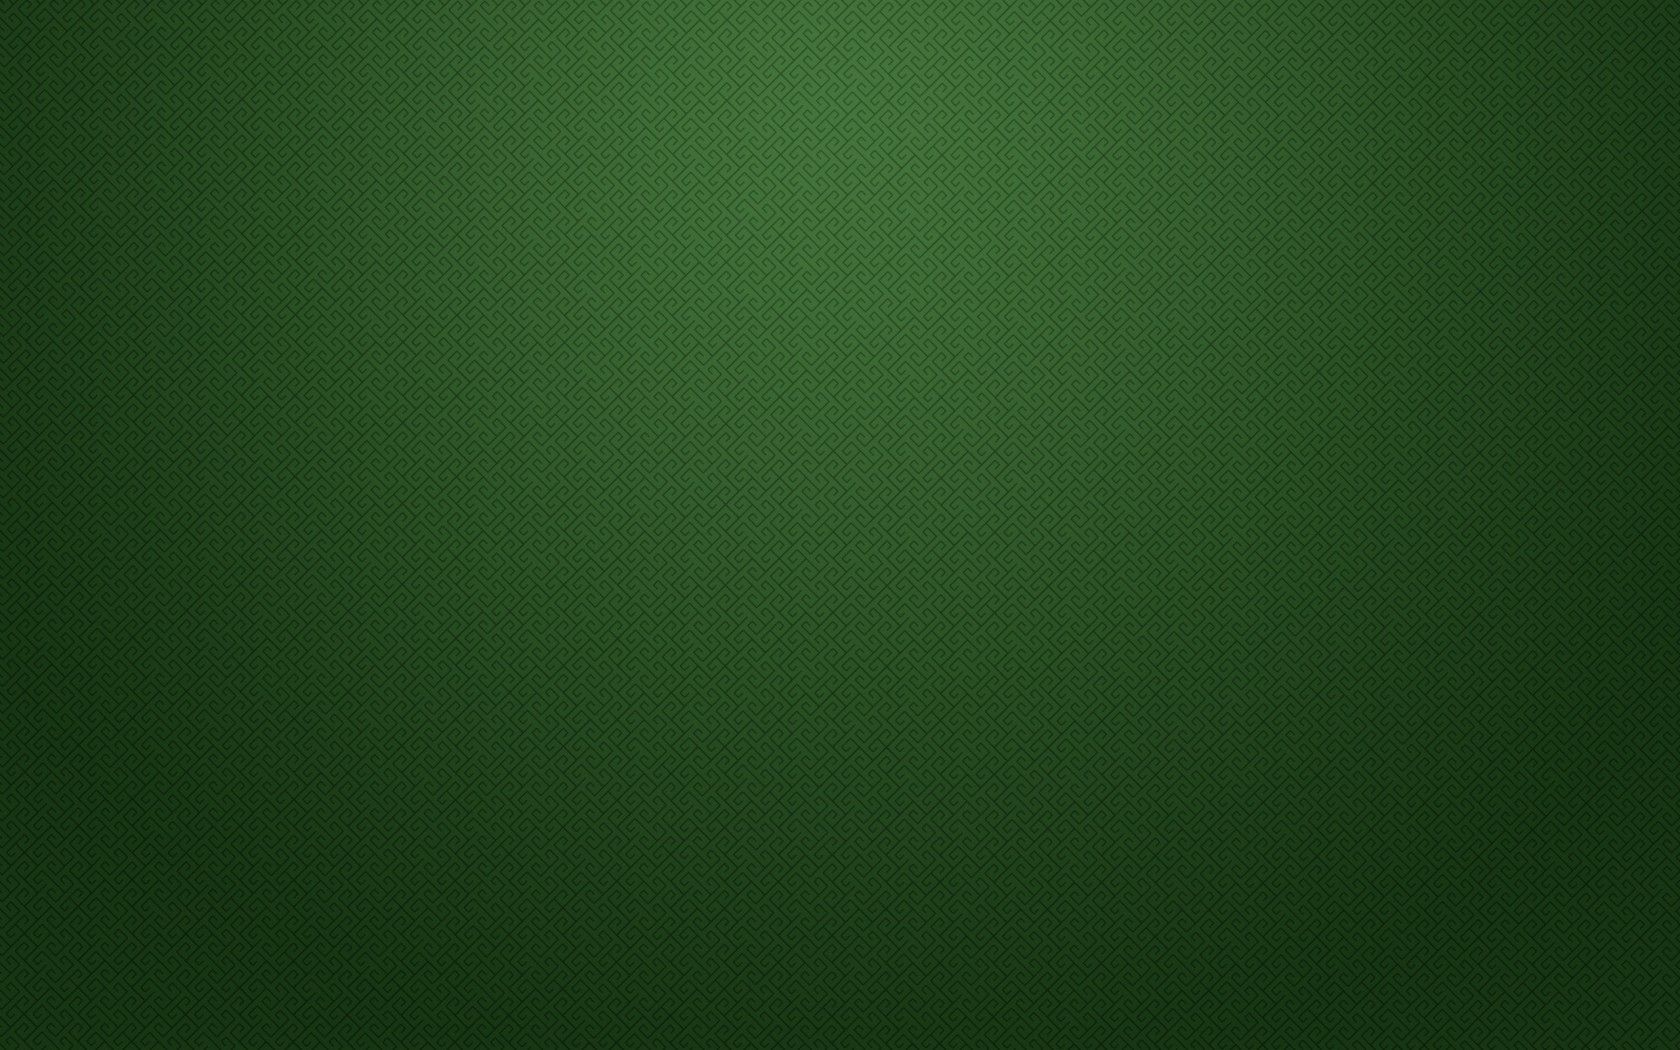 Solid green wallpaper